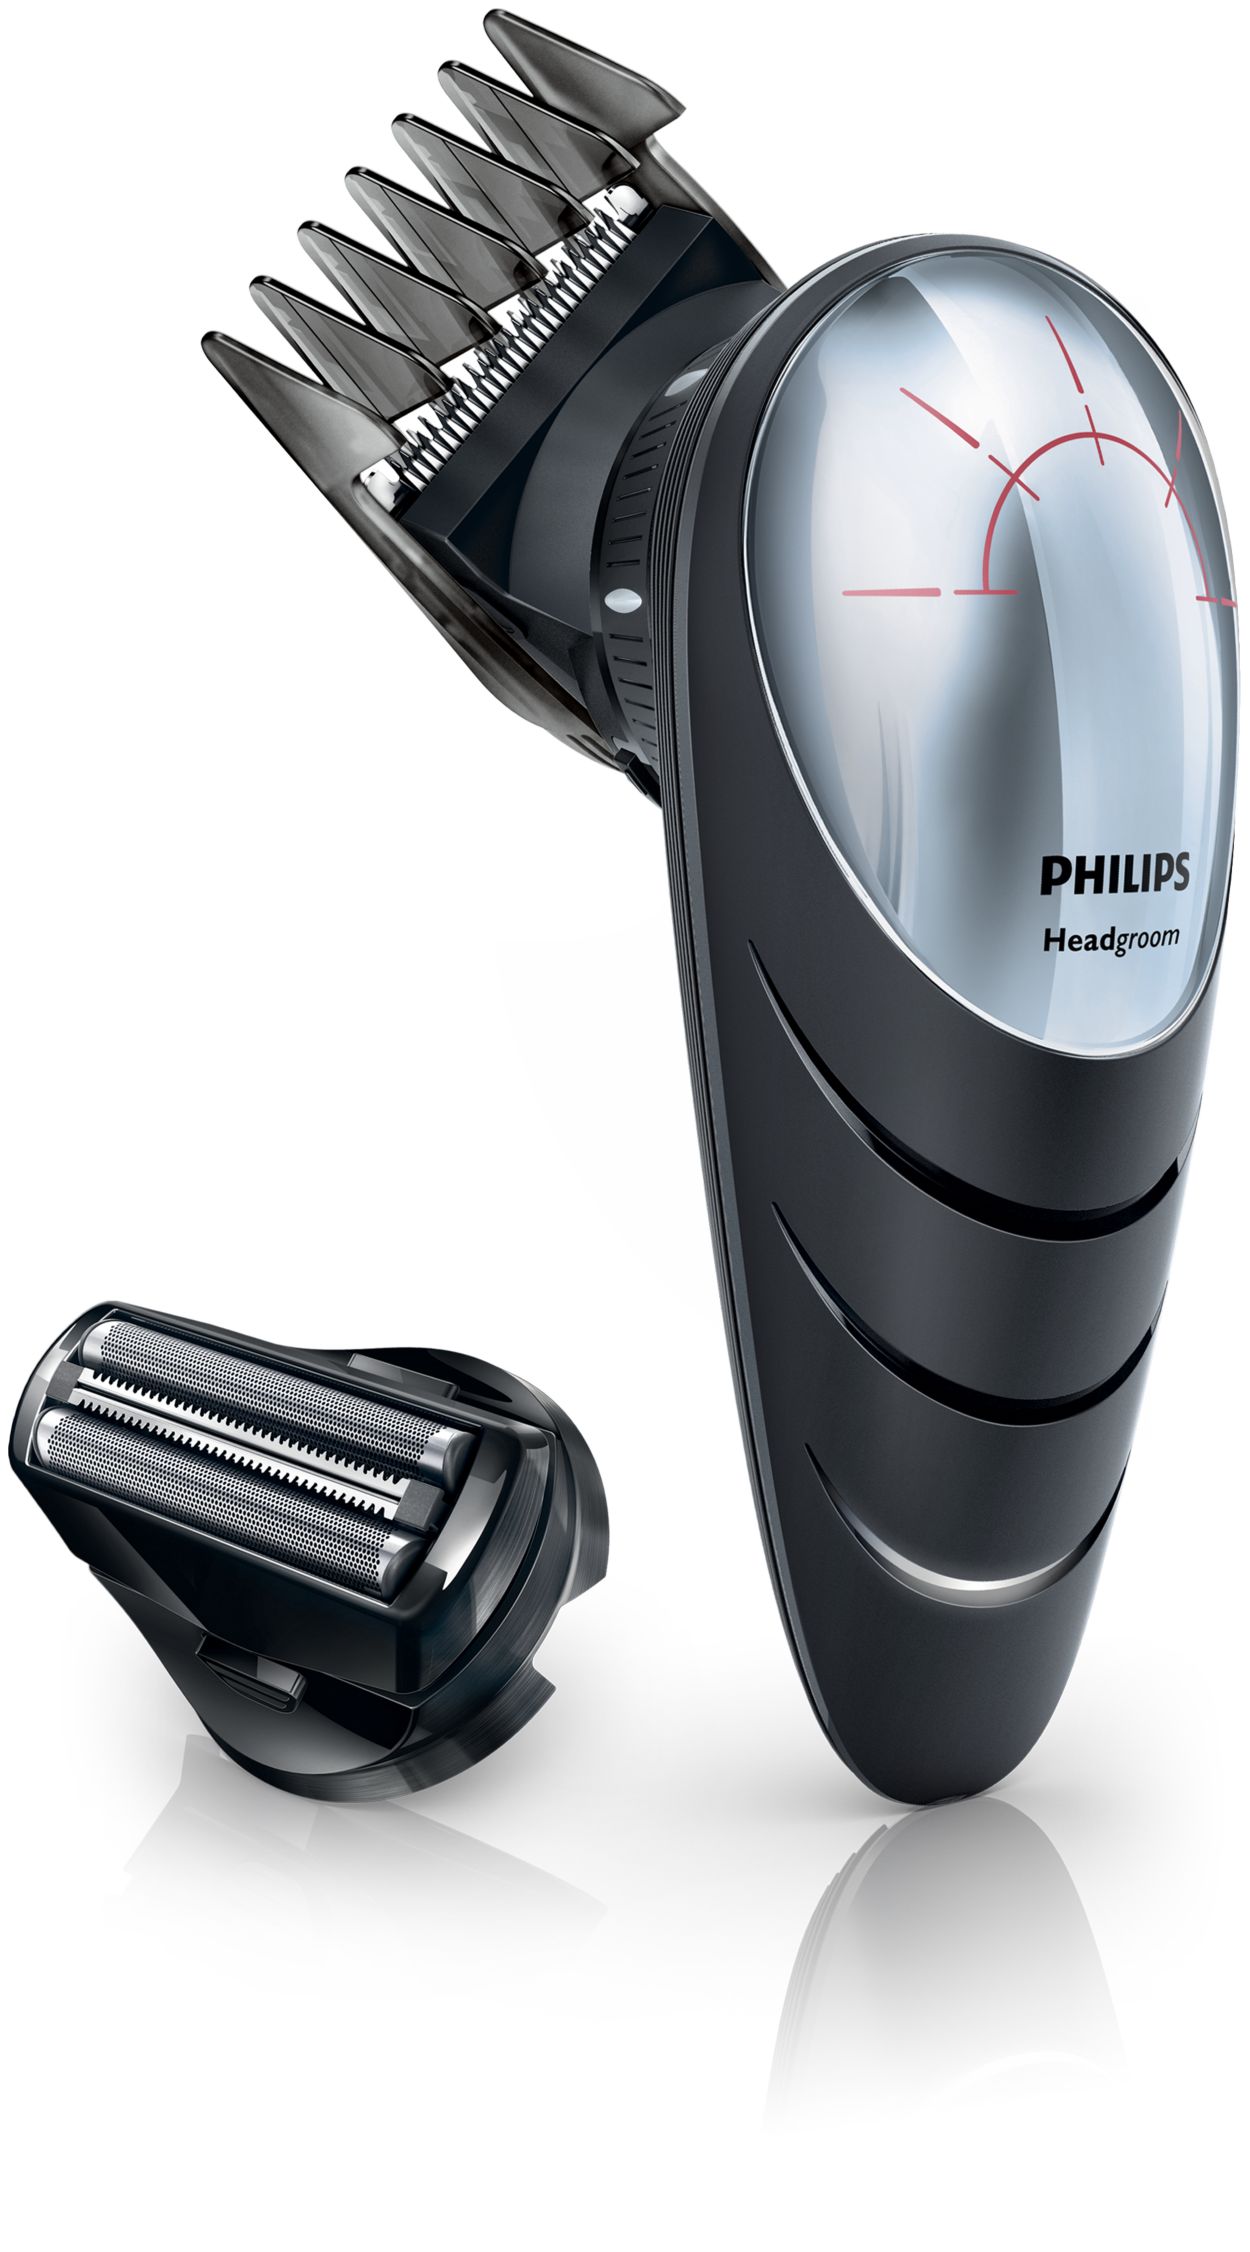 Машинка philips qc. Машинка для стрижки Philips qc5580. Филипс 5446 машинка для стрижки. Philips qc5050 Series 1000. Машинка для стрижки волос Филипс 0937.